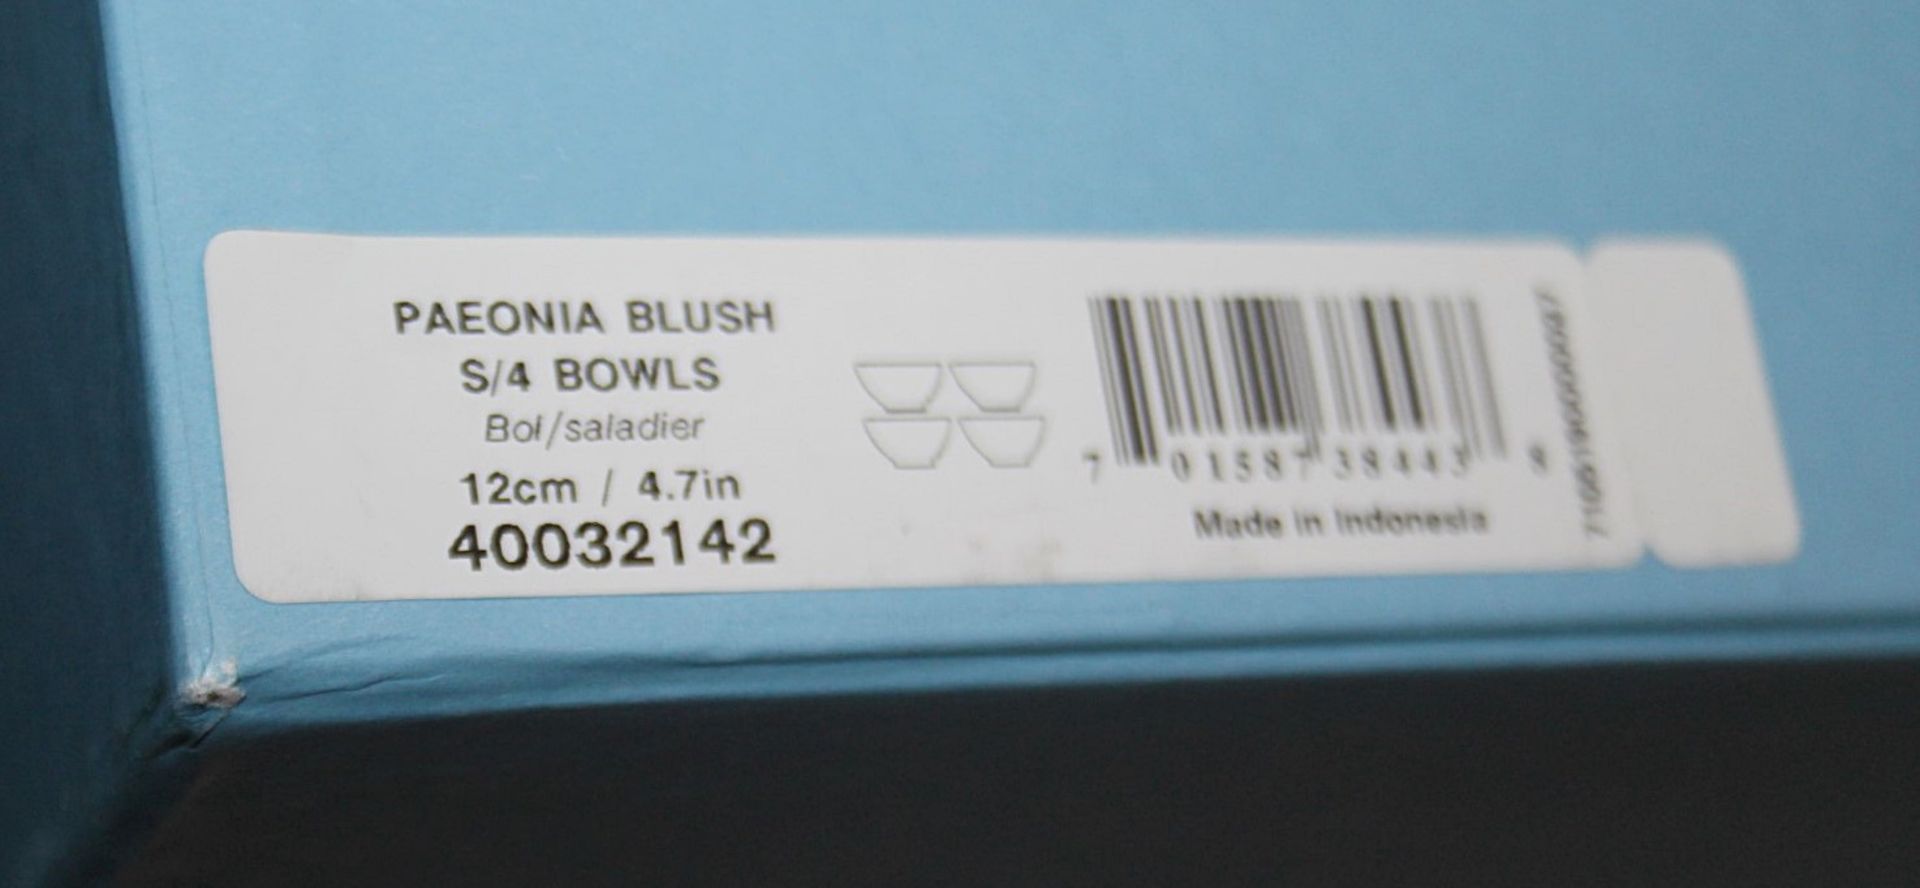 Set of 4 x WEDGWOOD 'Paeonia Blush' ine Bone Chine Bowls - Original Price £100.00 - Boxed Stock - Image 11 of 12